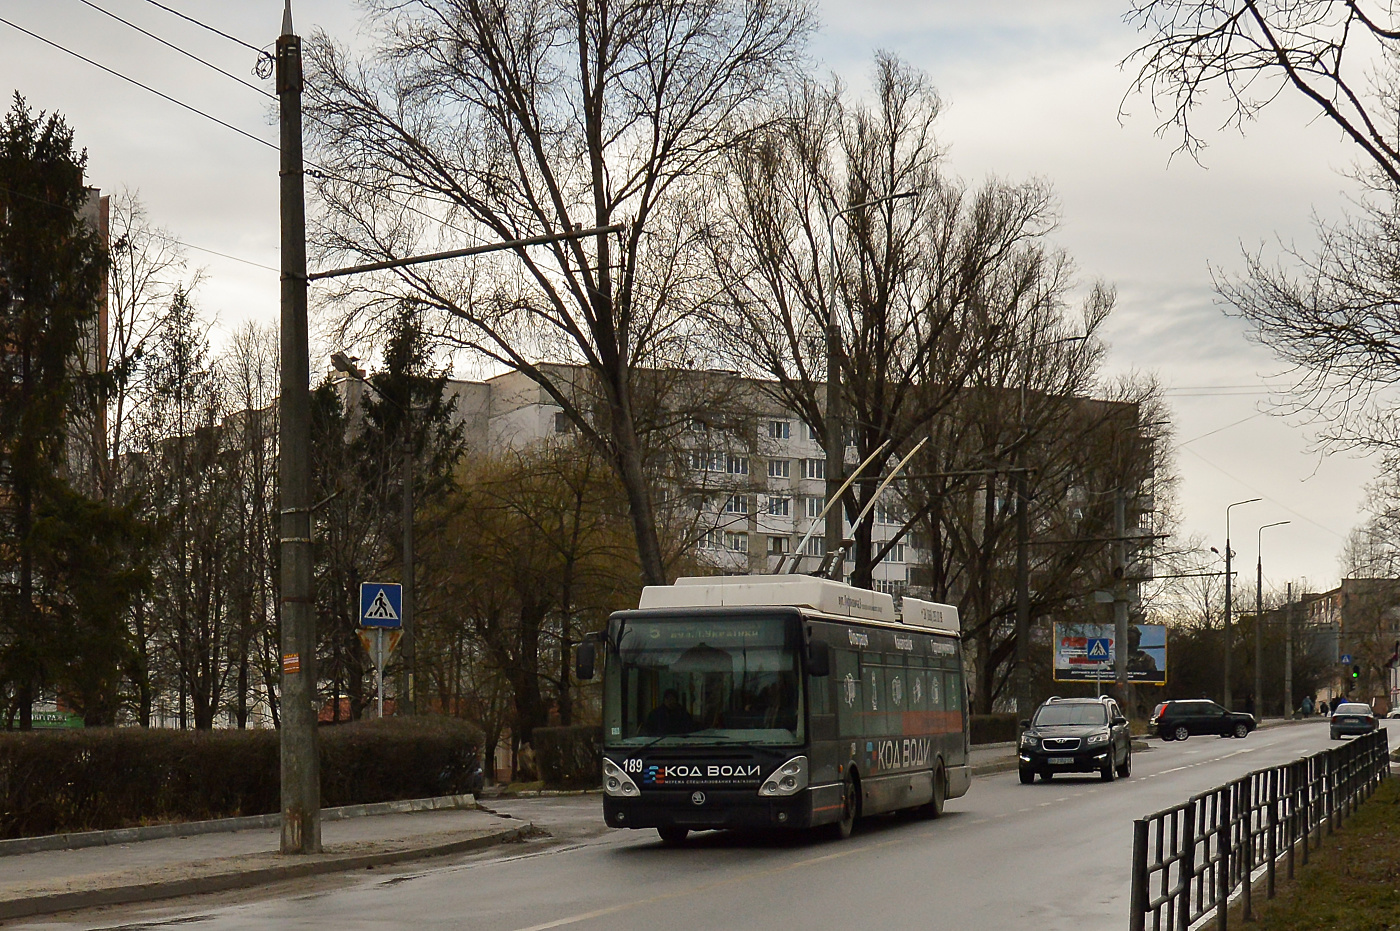 Škoda 24Tr Irisbus #189